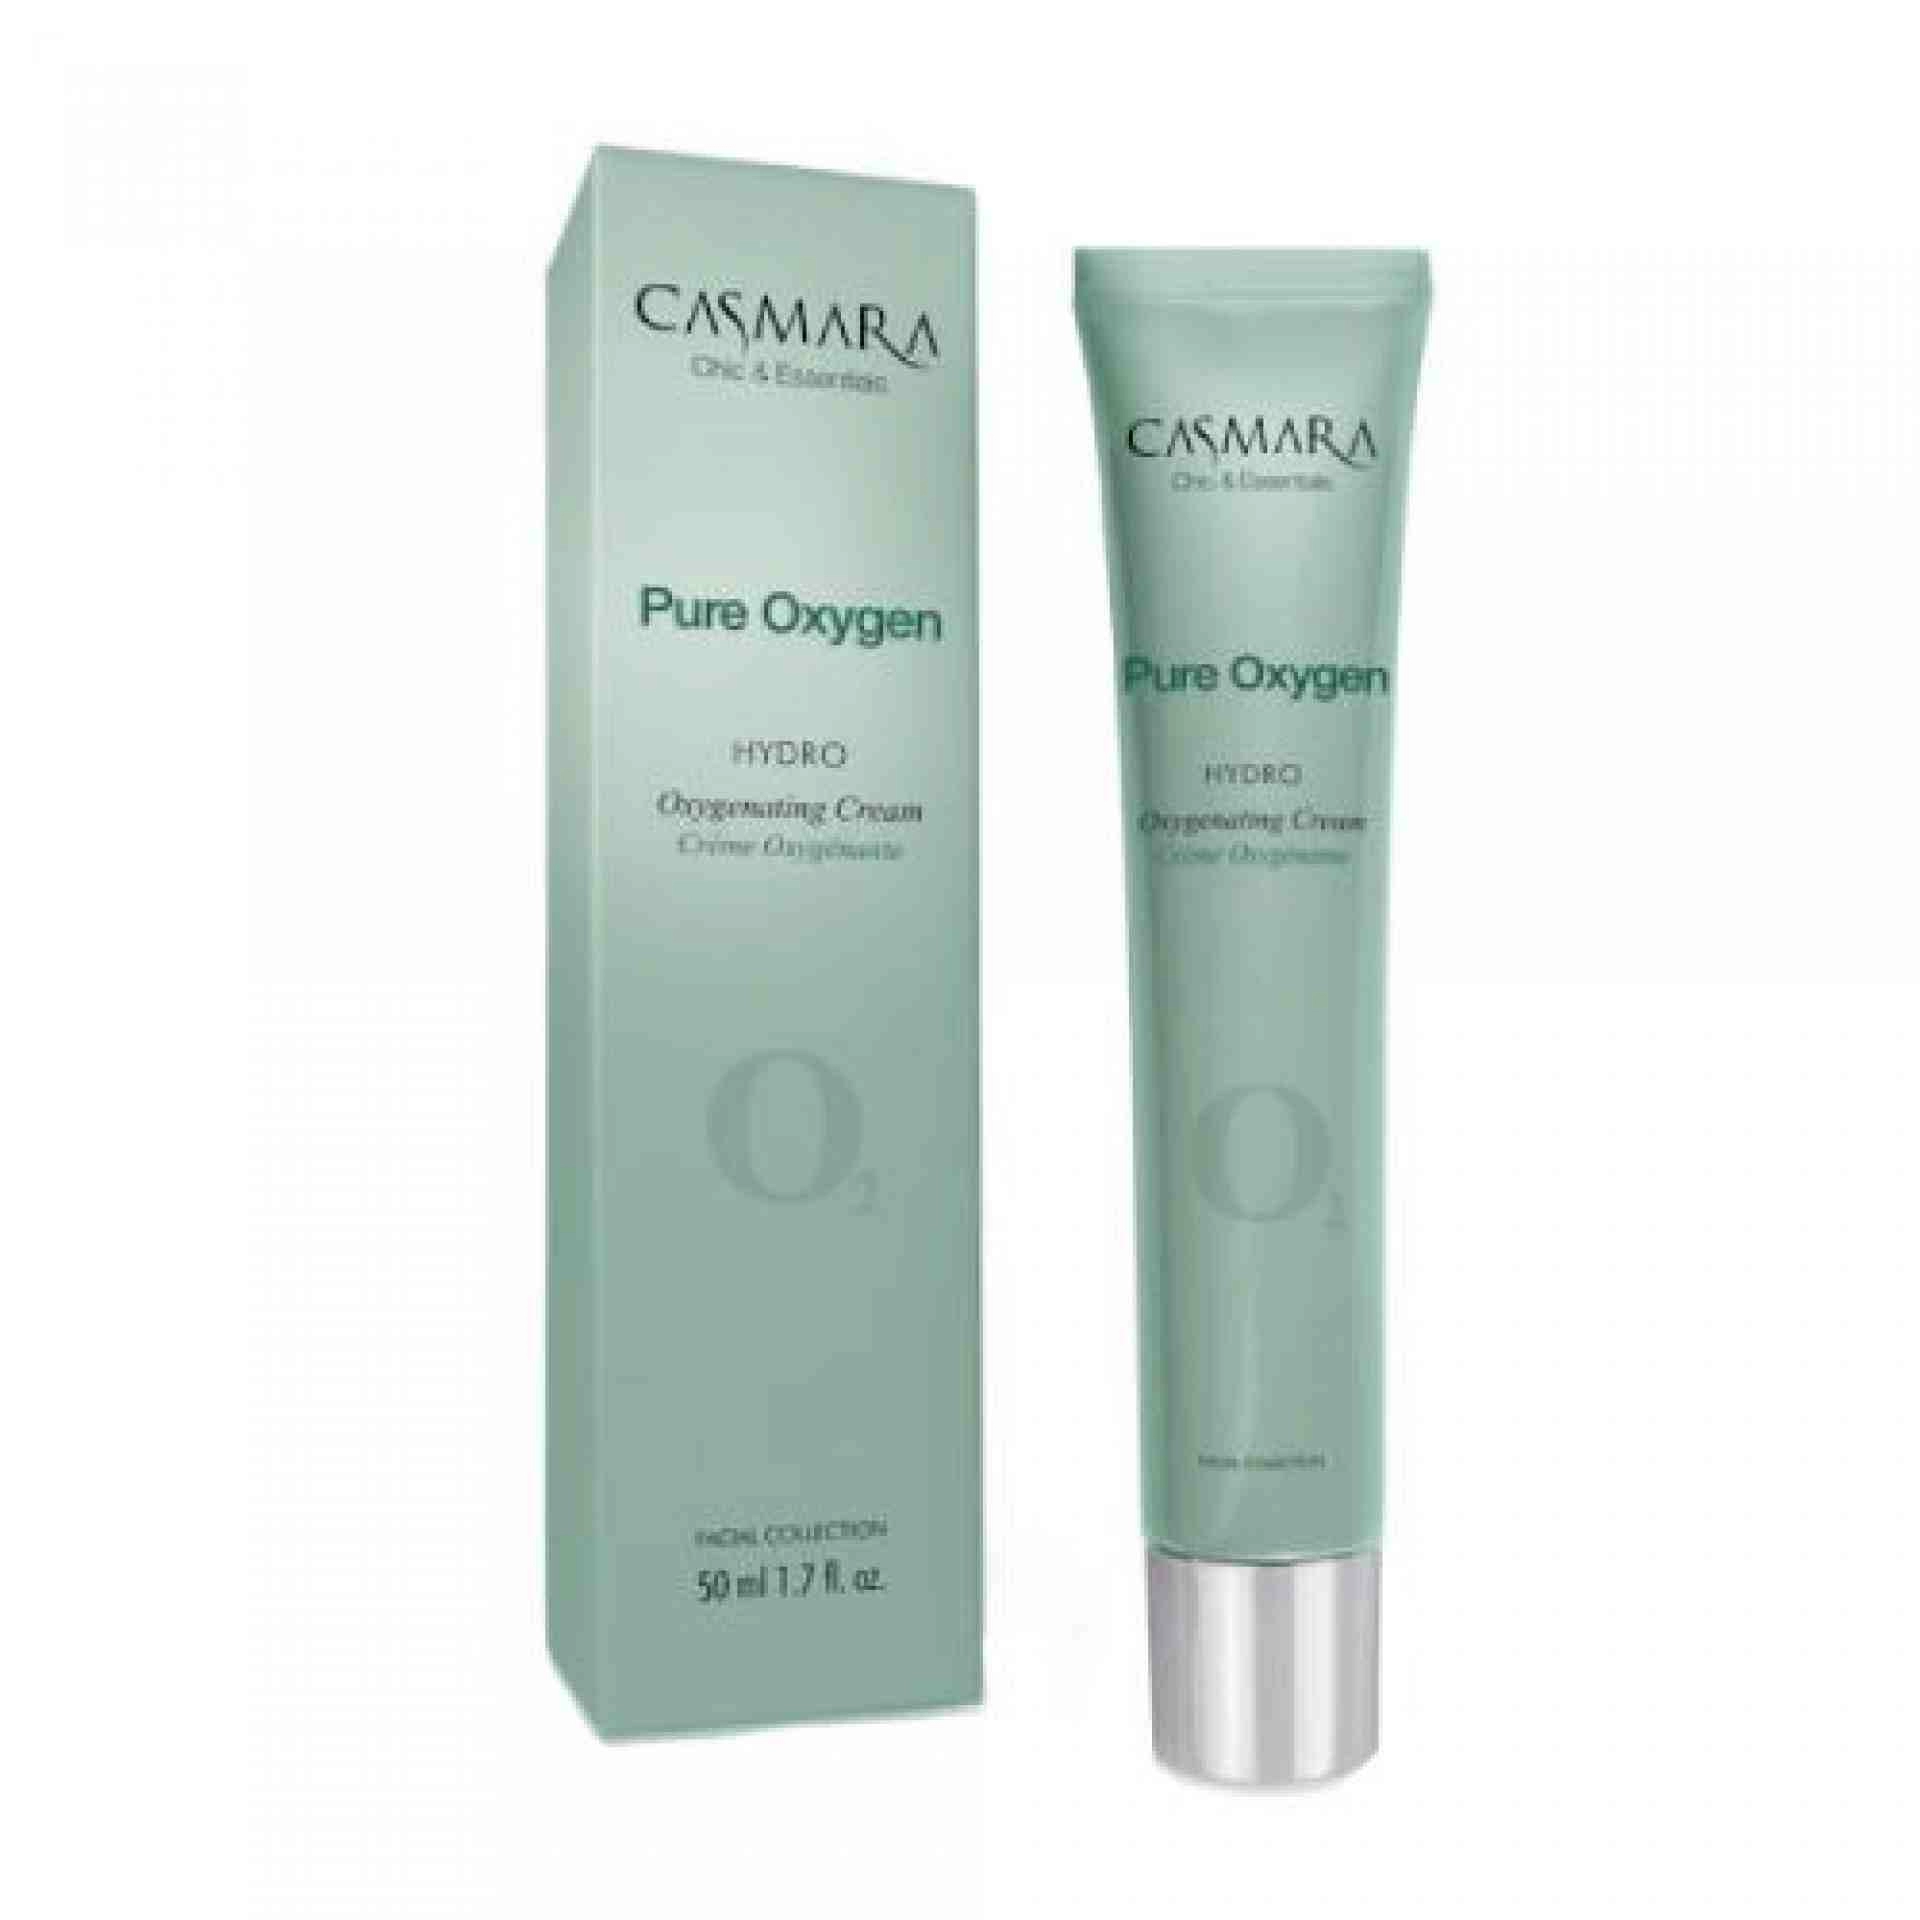 Hydro Oxygenating Cream | Crema hidratante oxigenante 50 ml - Pure Oxygen - Casmara ®